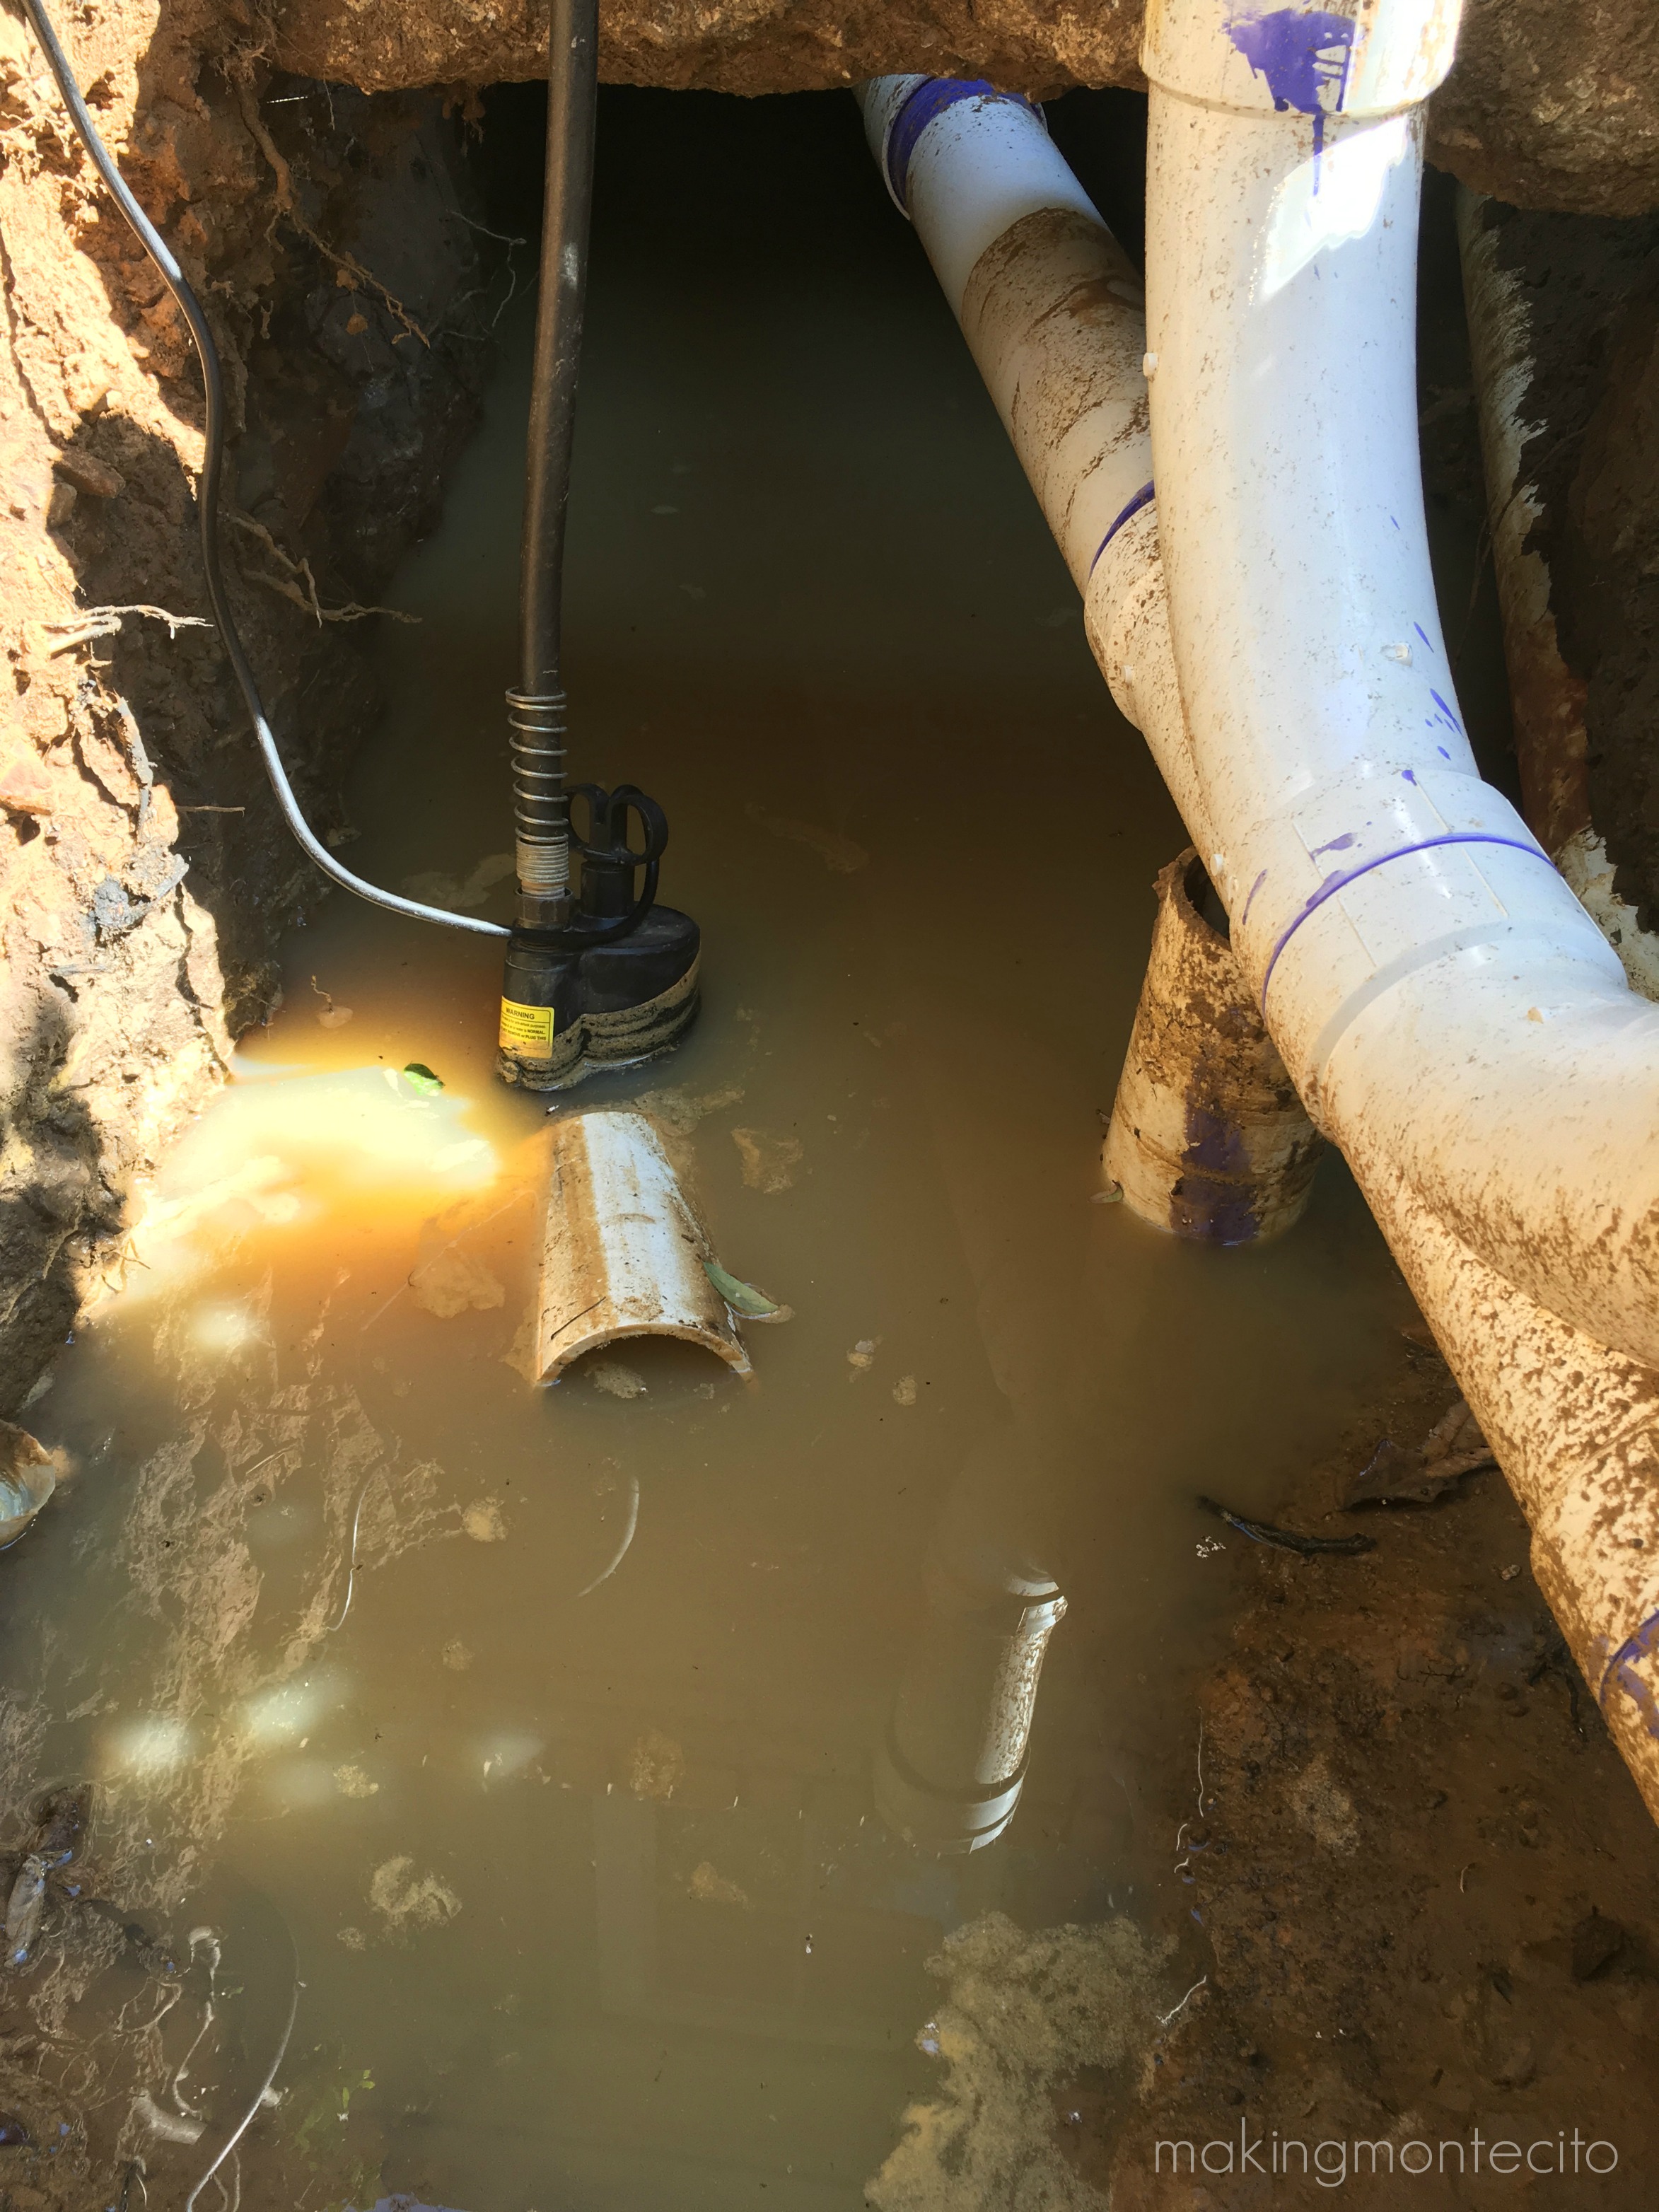 sewer-repair-part-2-making-montecito-3